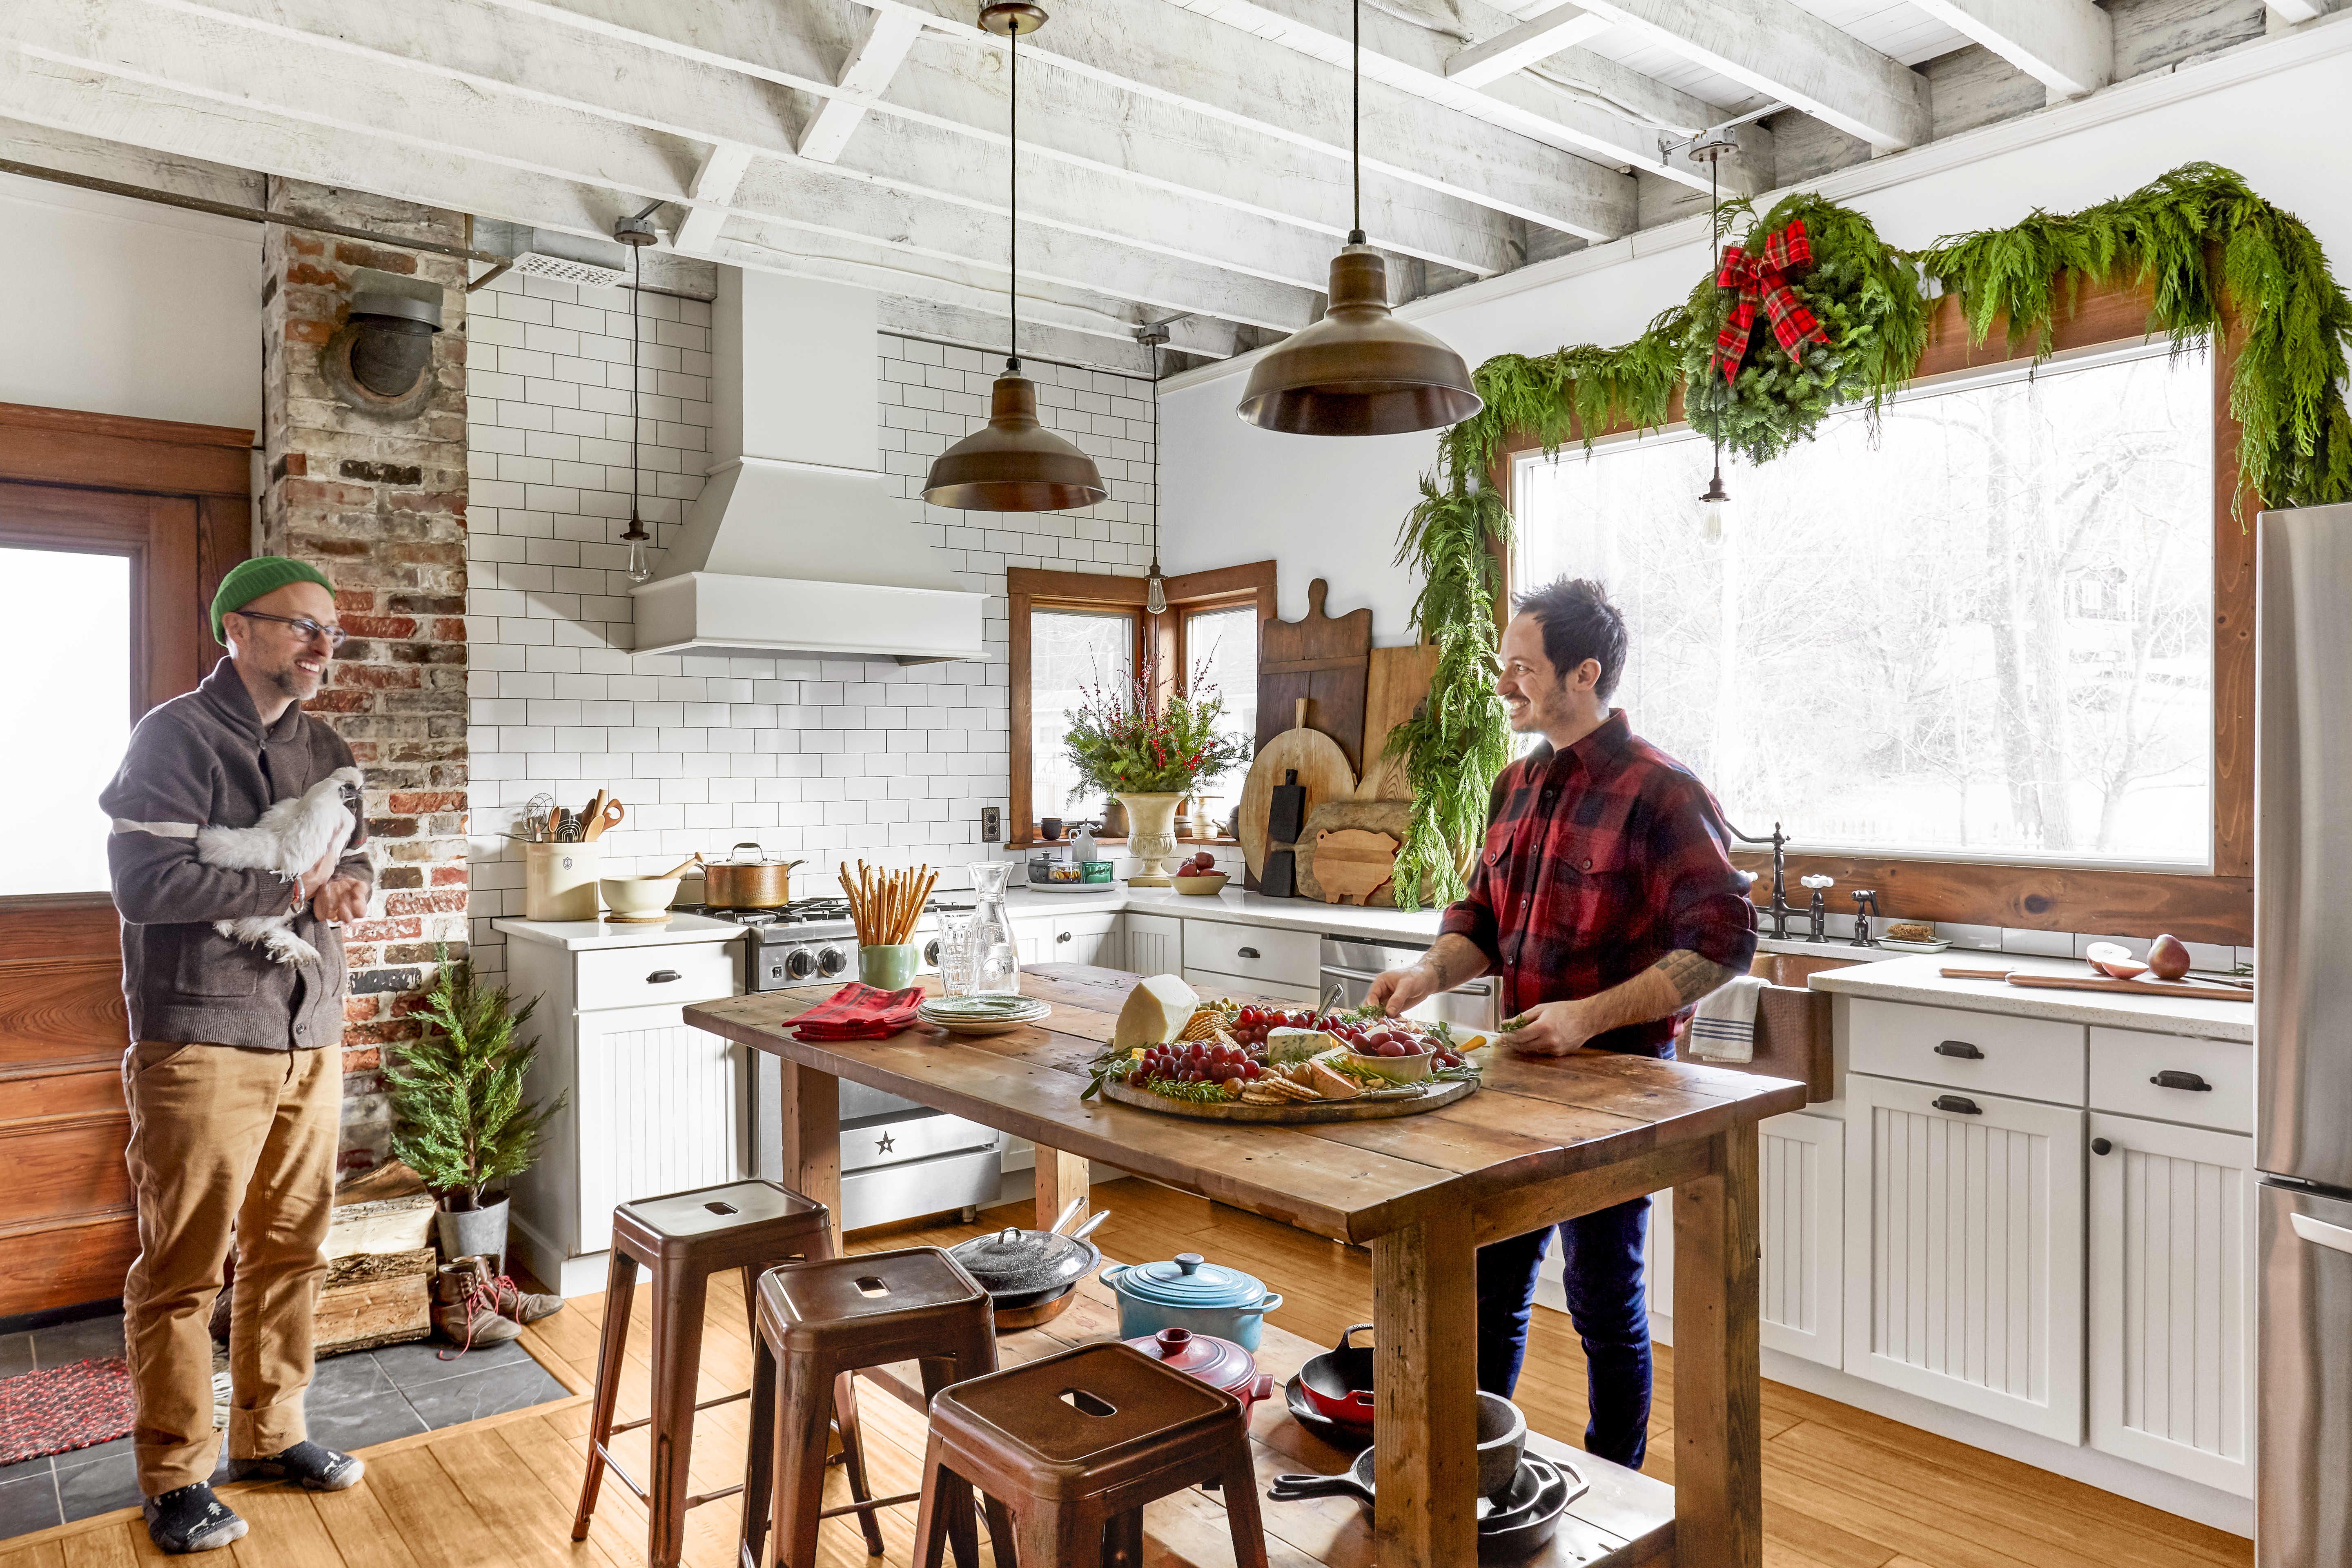 https://hips.hearstapps.com/hmg-prod/images/christmas-kitchen-decorations-greenery-on-window-wreath-jpg-1603211899.jpg